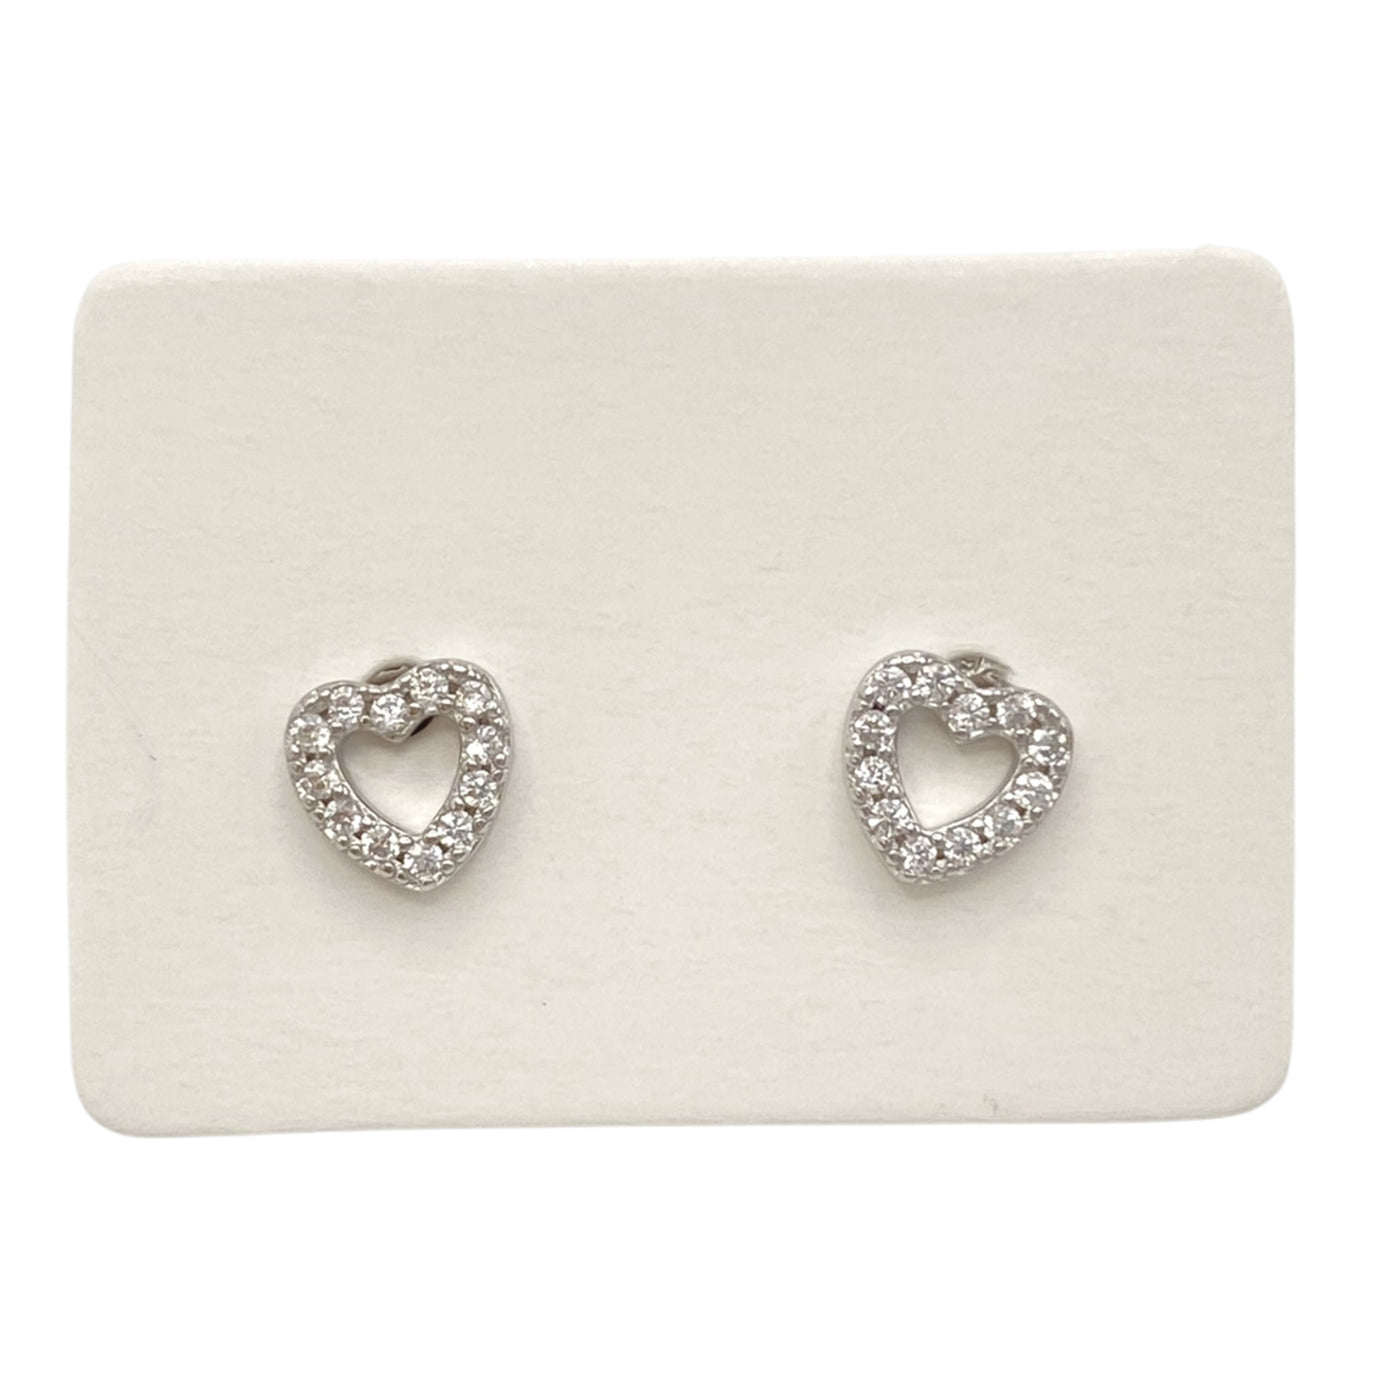 Pack of 5 silver stud heart earrings - 6.3 mm